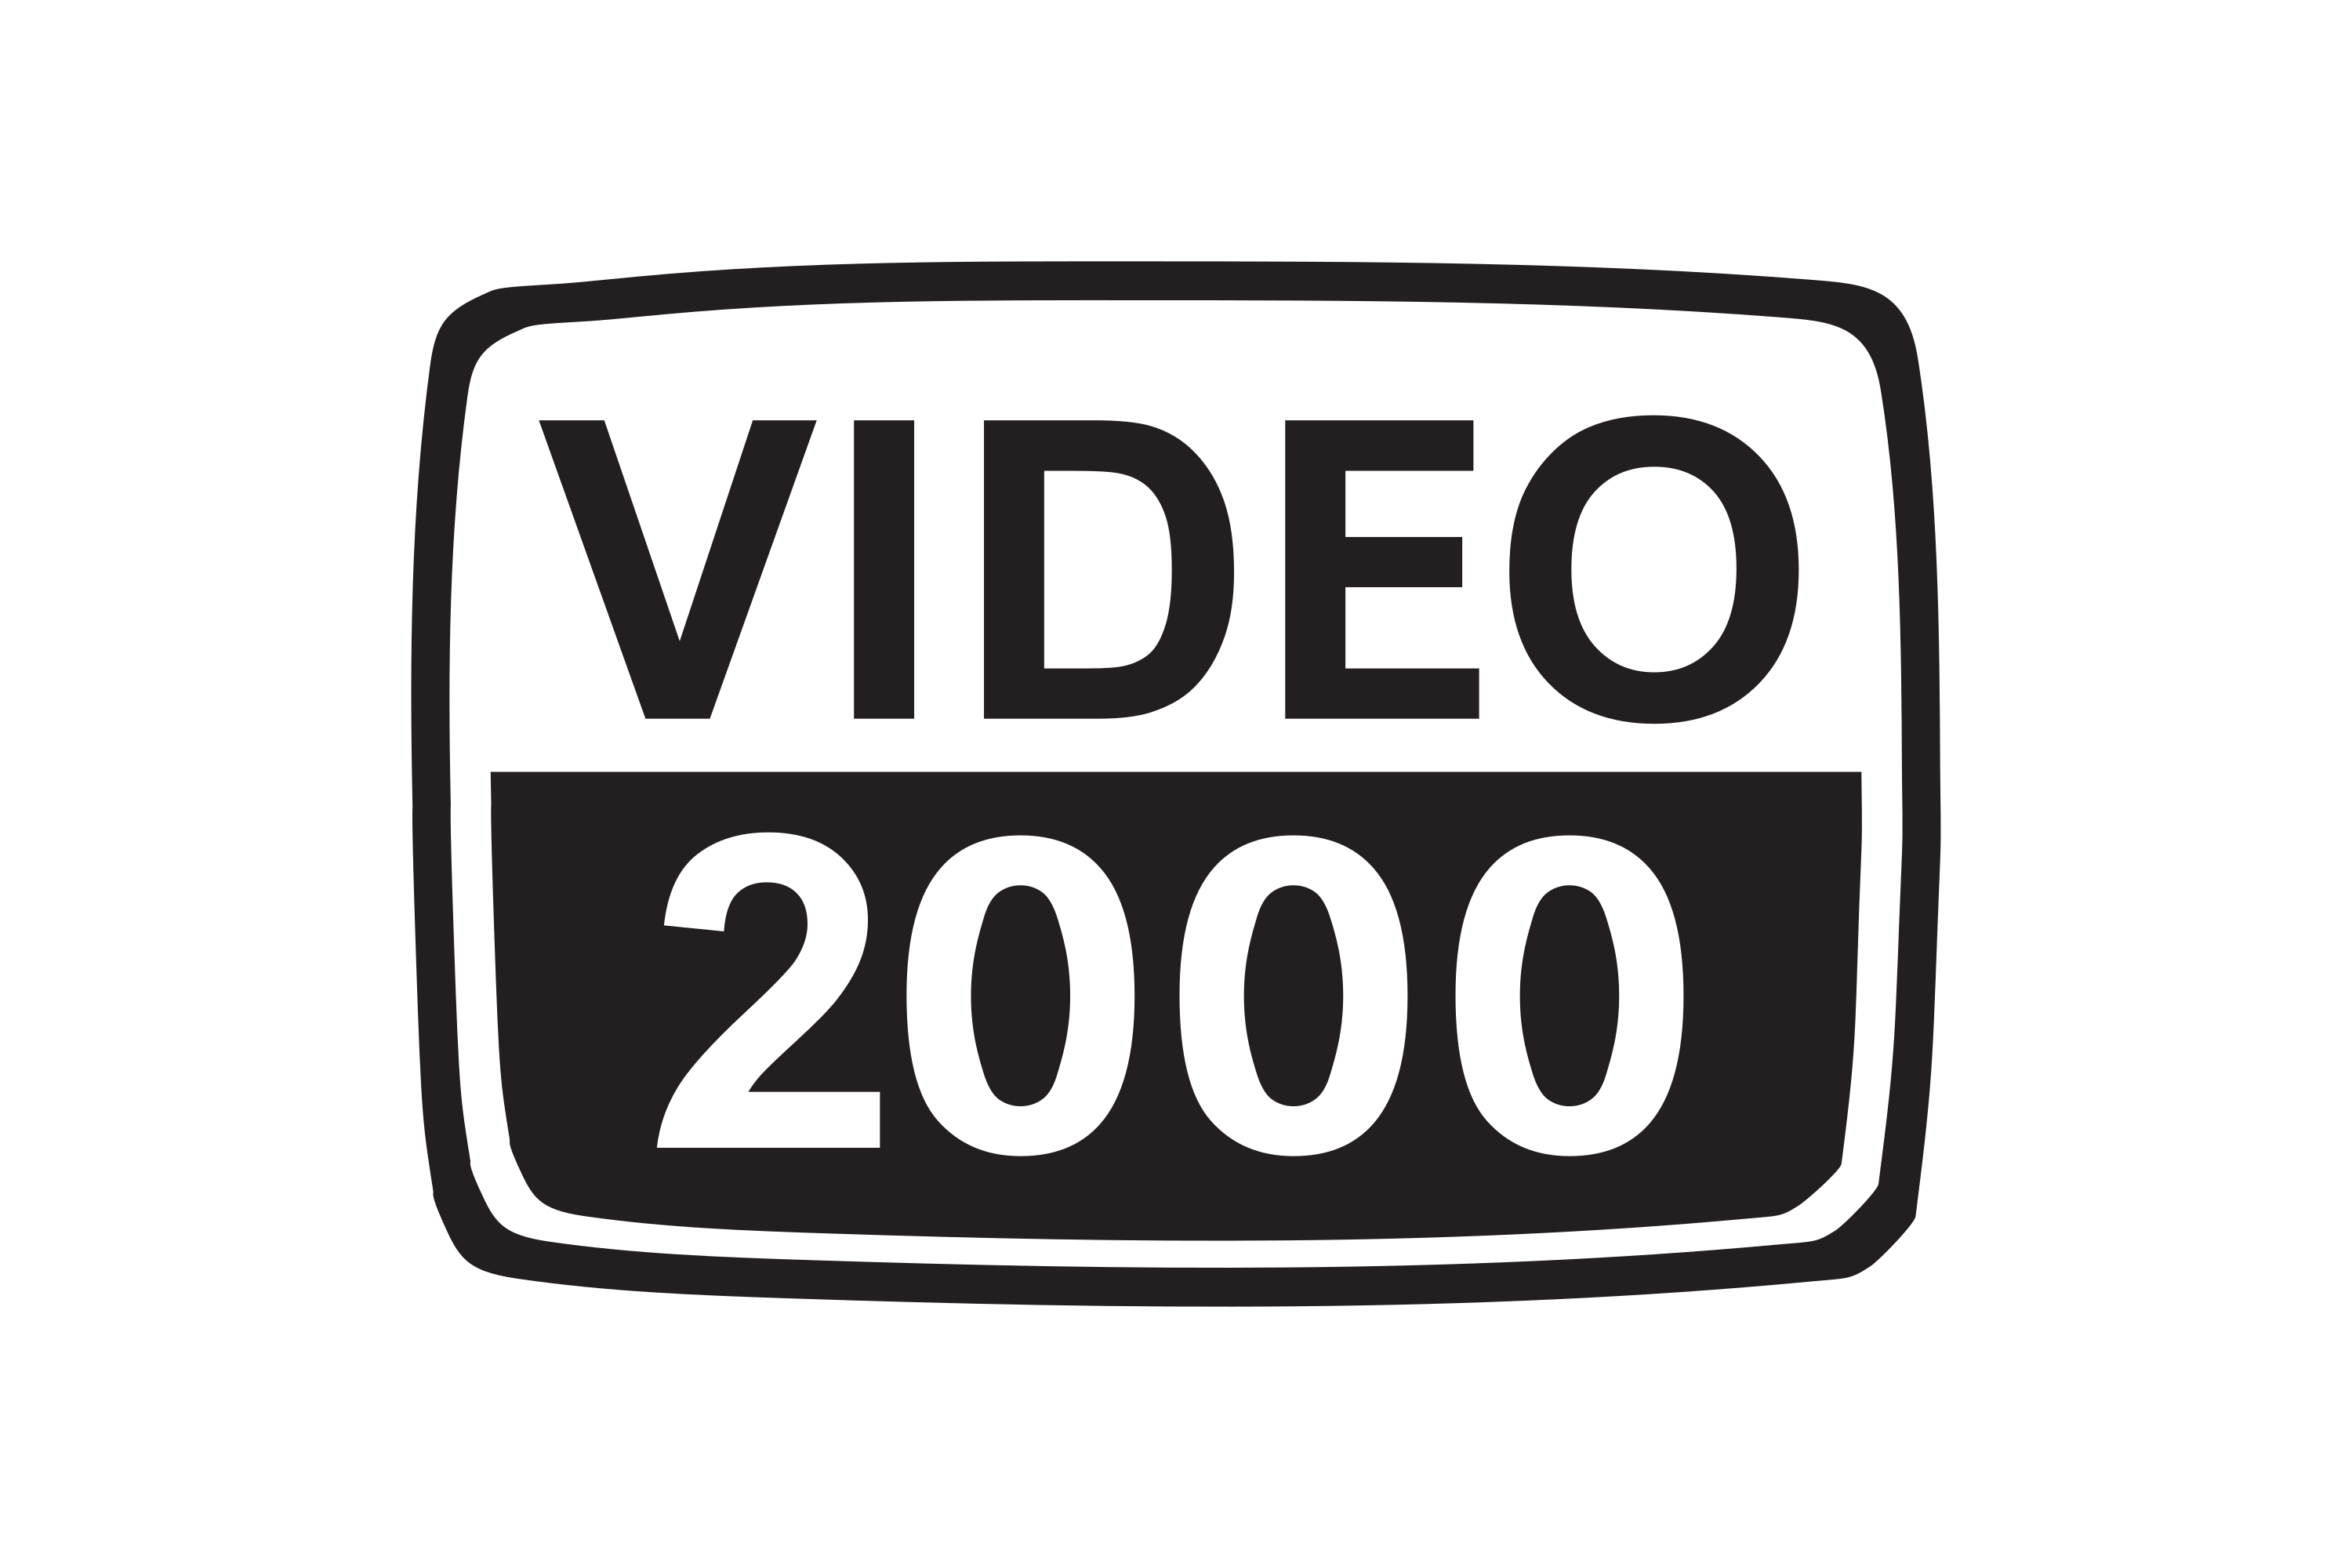 Pdf Logo png download - 1600*600 - Free Transparent Video png Download. -  CleanPNG / KissPNG